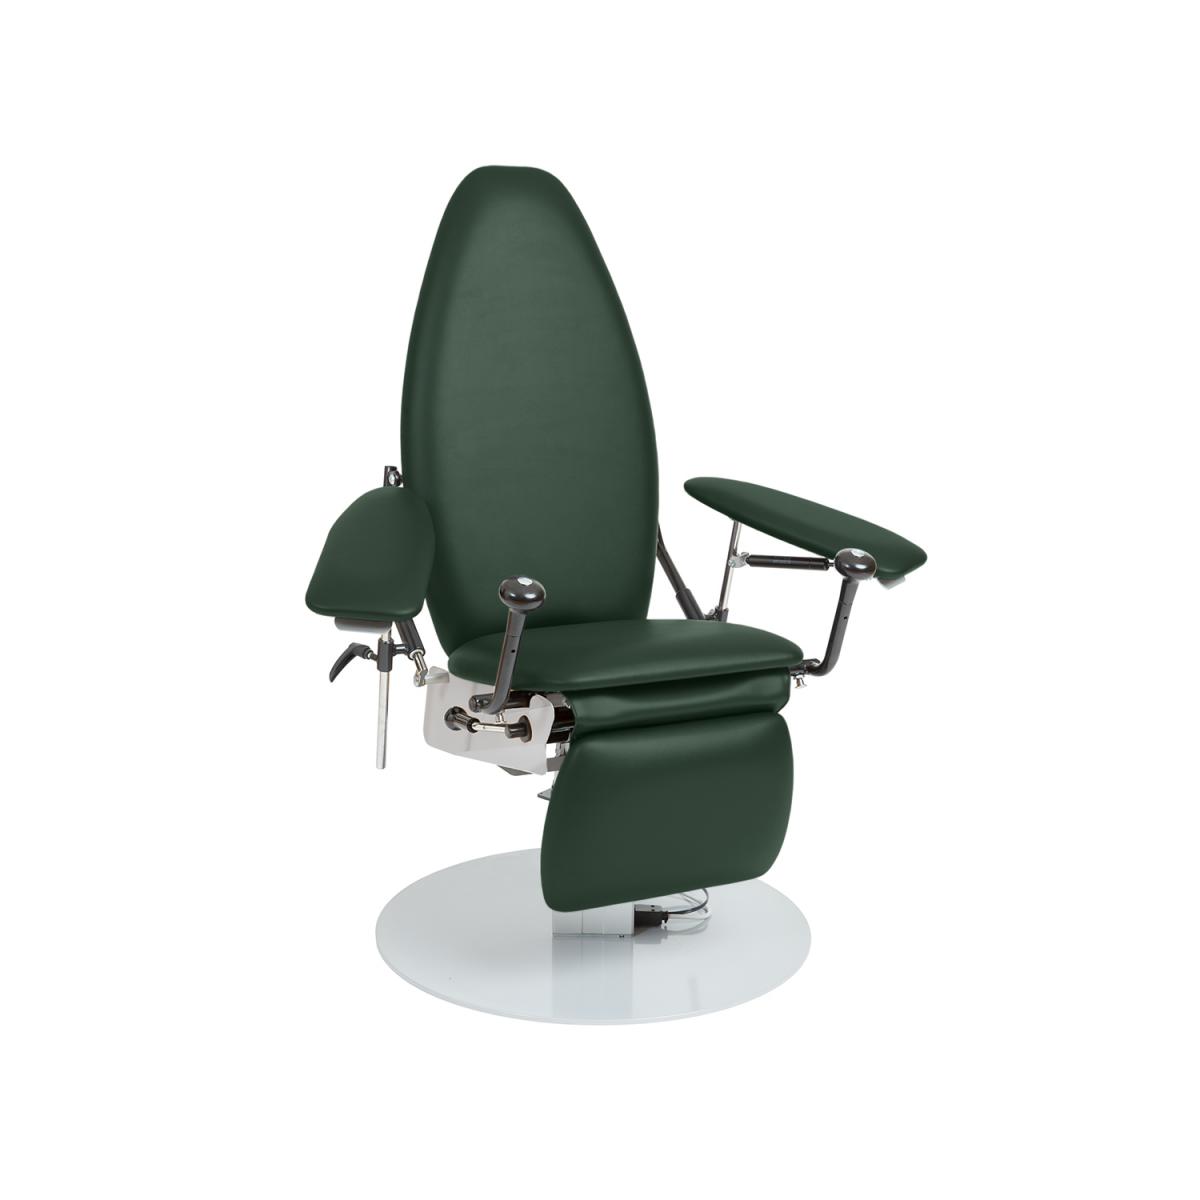 Sampling chair 510